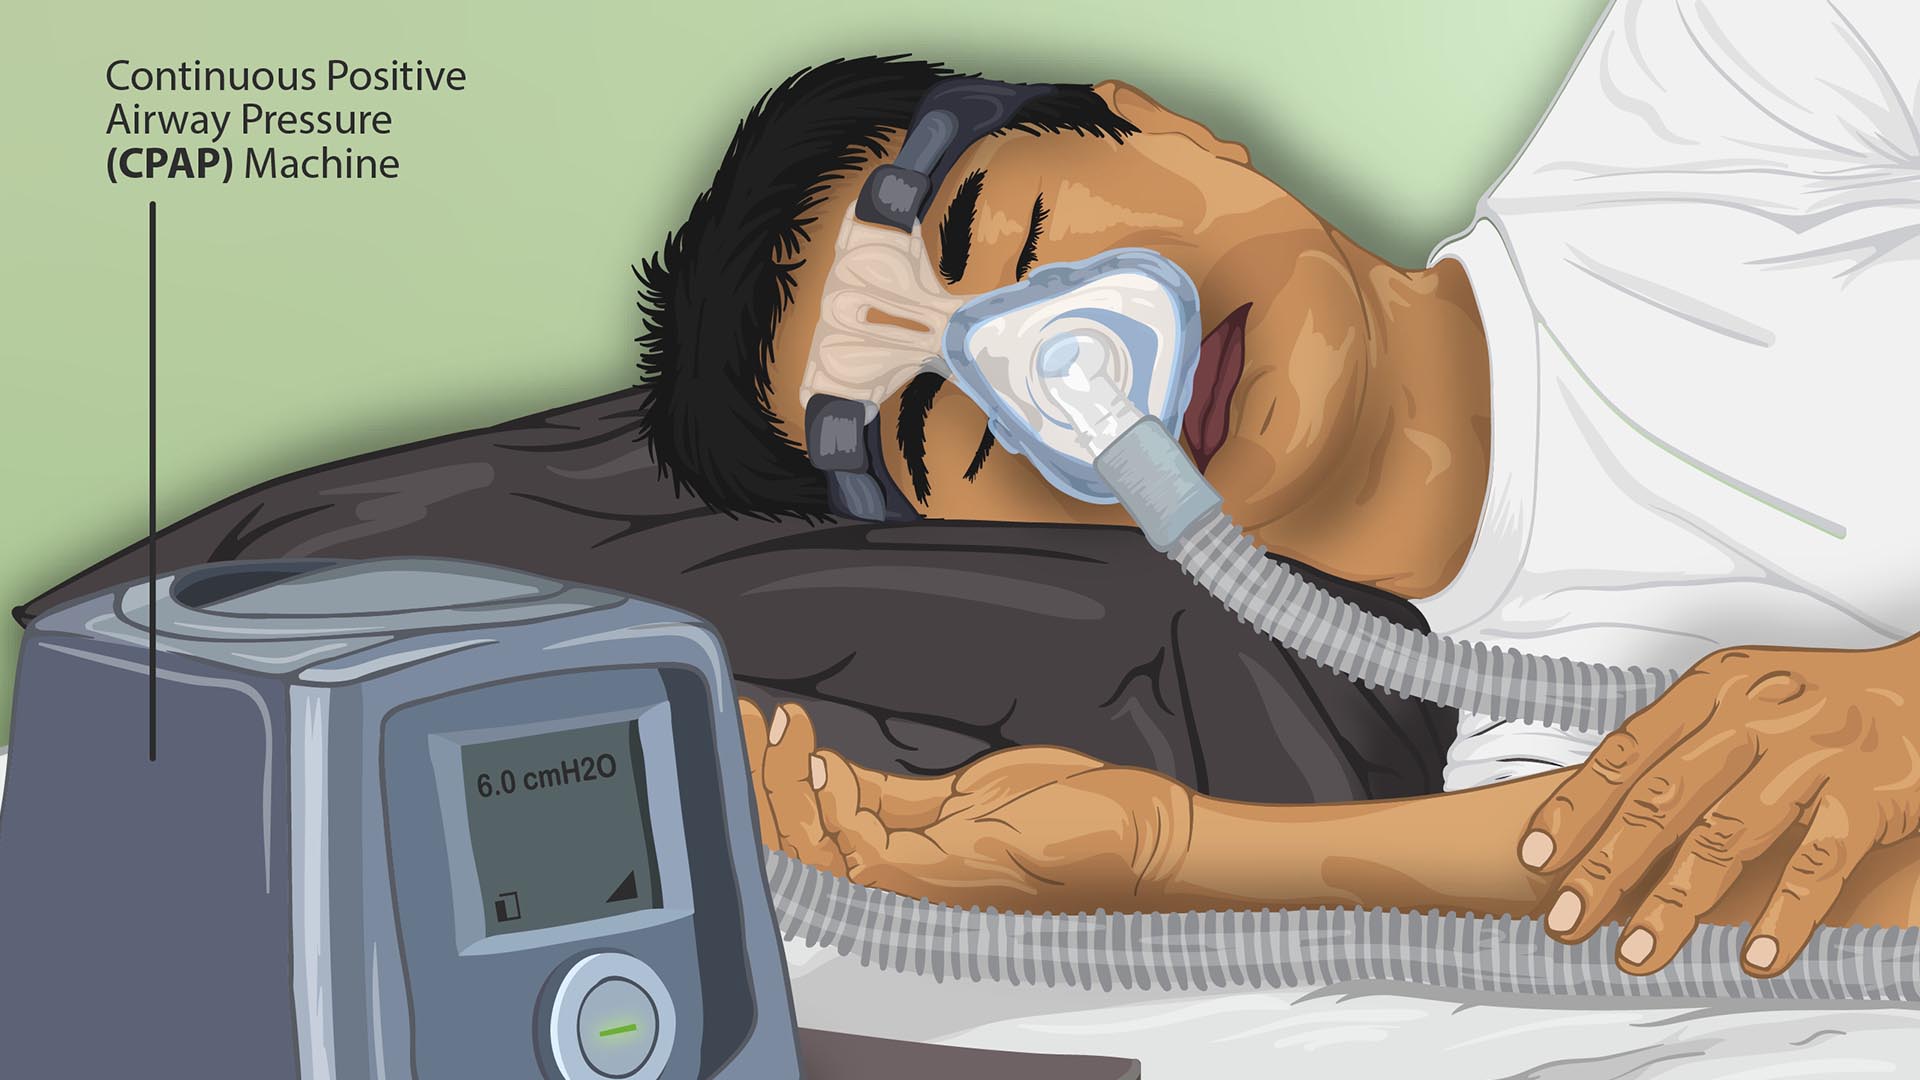 Depiction of a sleep apnea patient using a CPAP machine